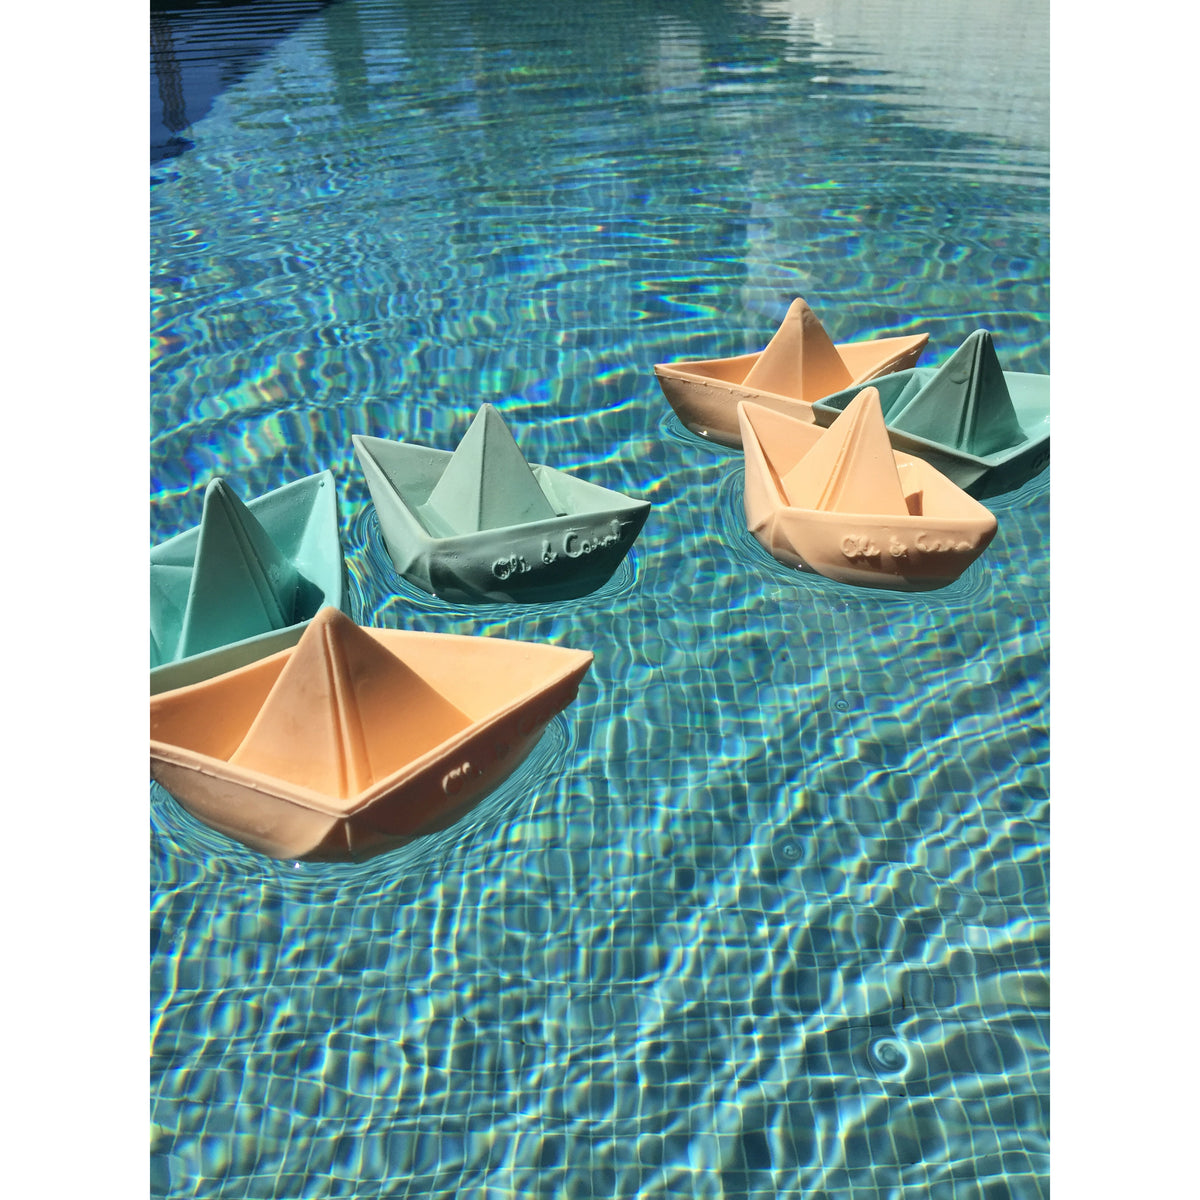 oli-&amp;-carol-origami-boat-nude- (24)